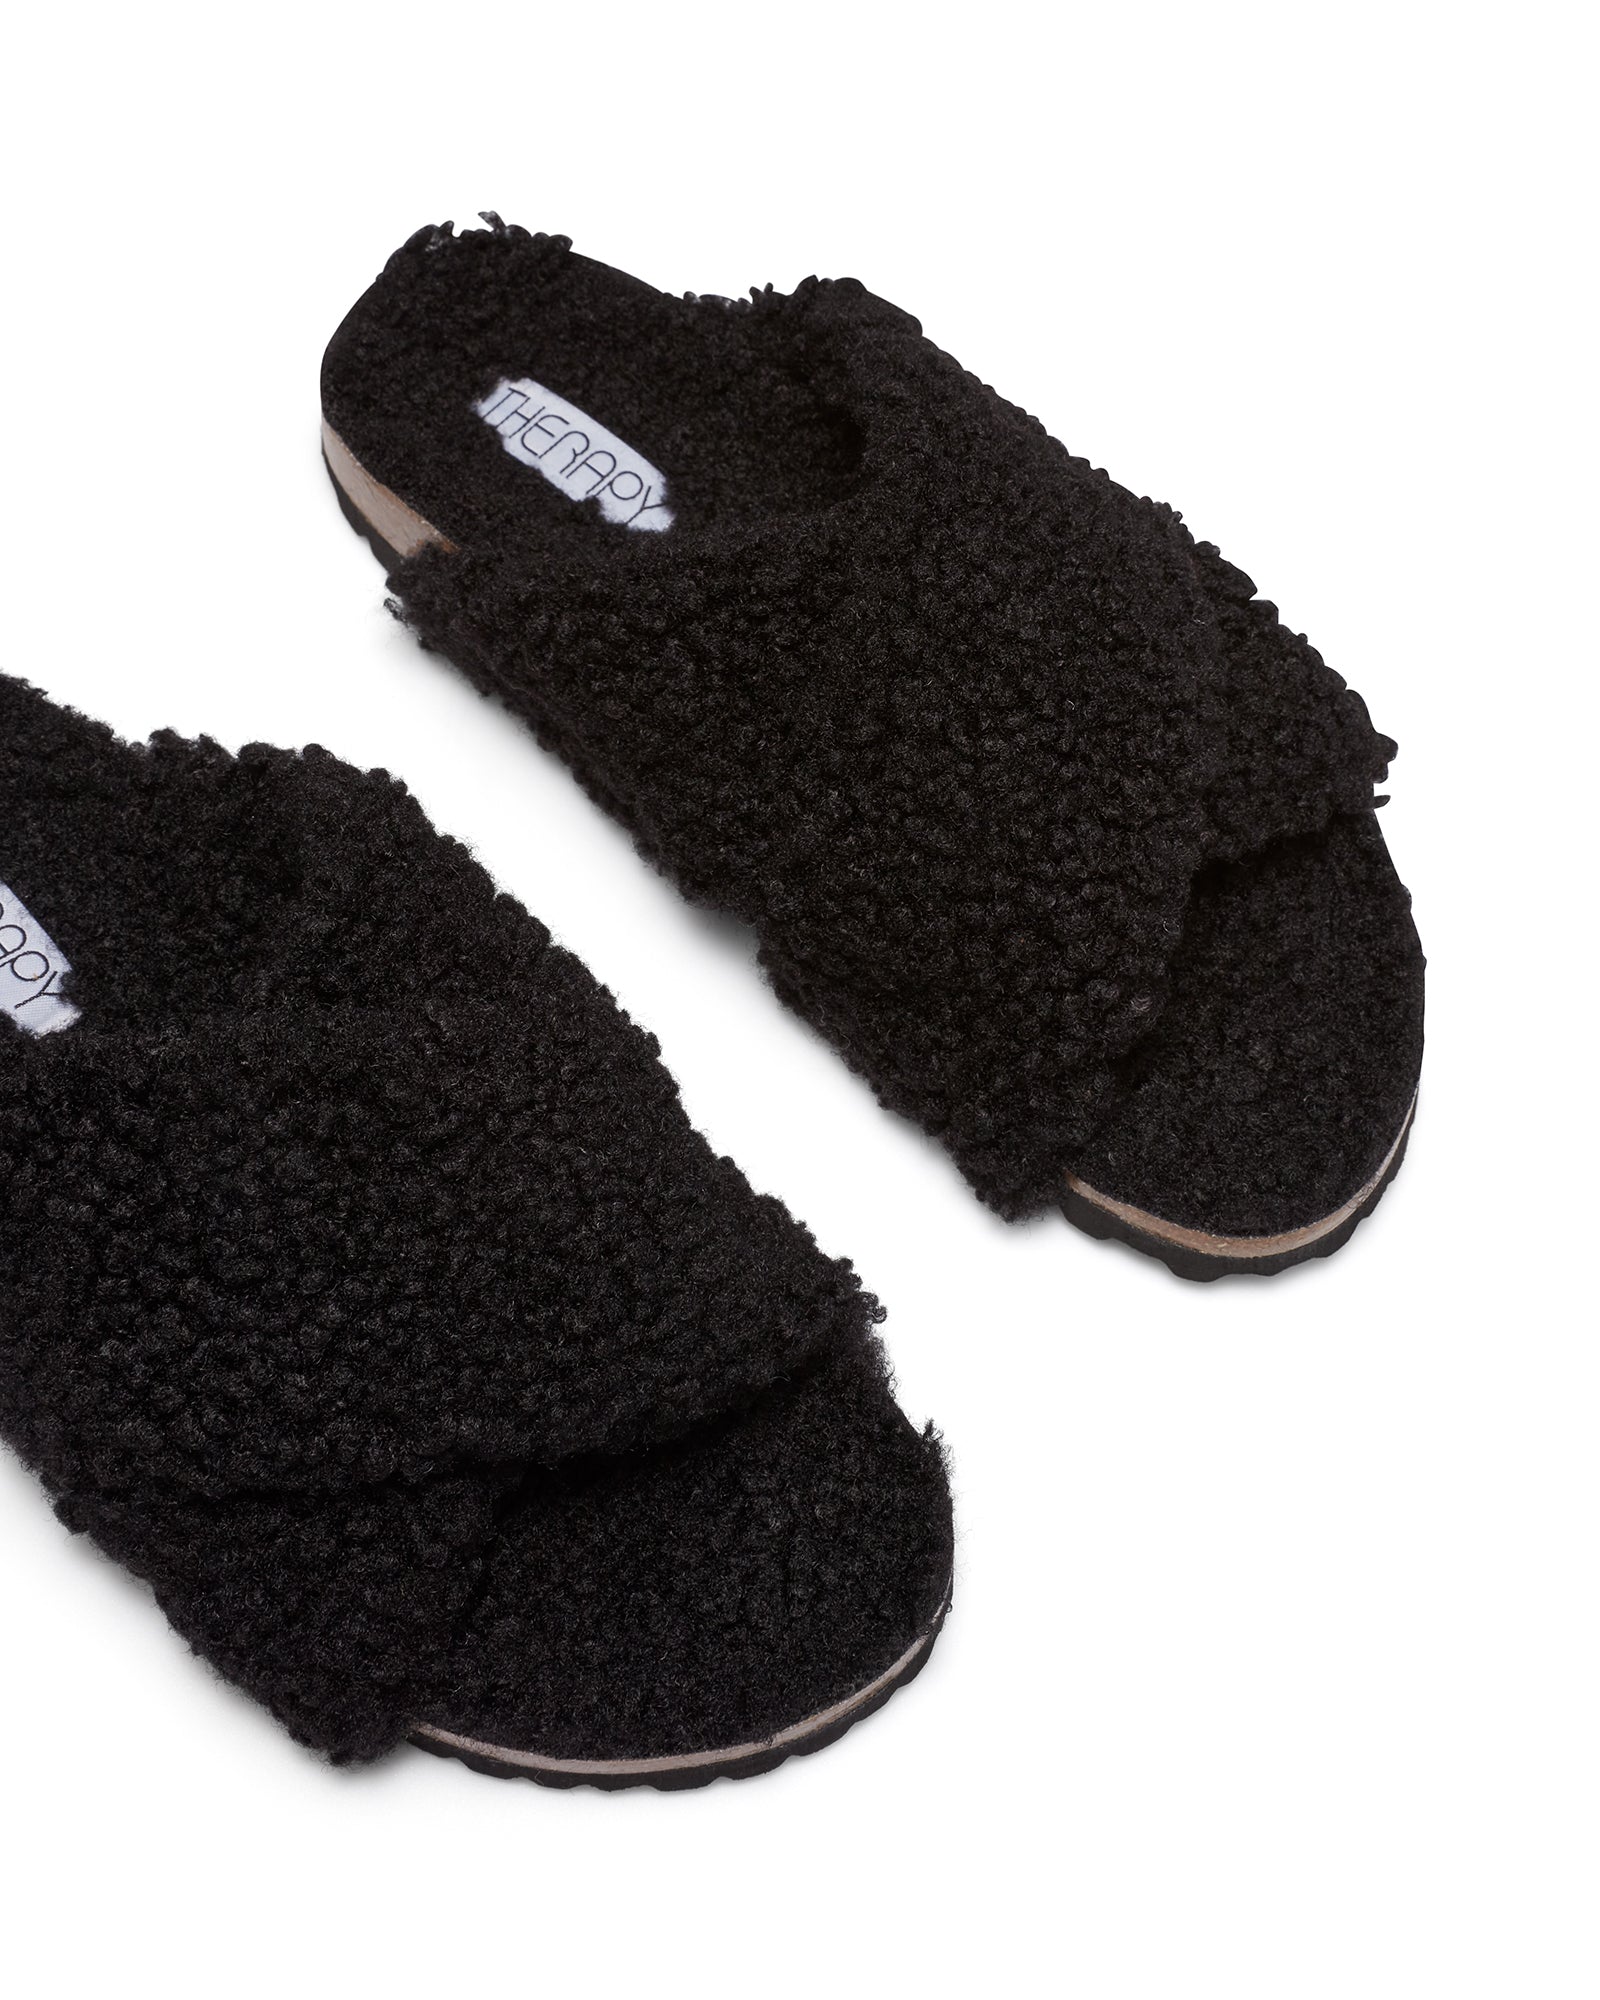 Therapy Shoes Bingley Black | Women's Slides | Sandals | Faux Fur  